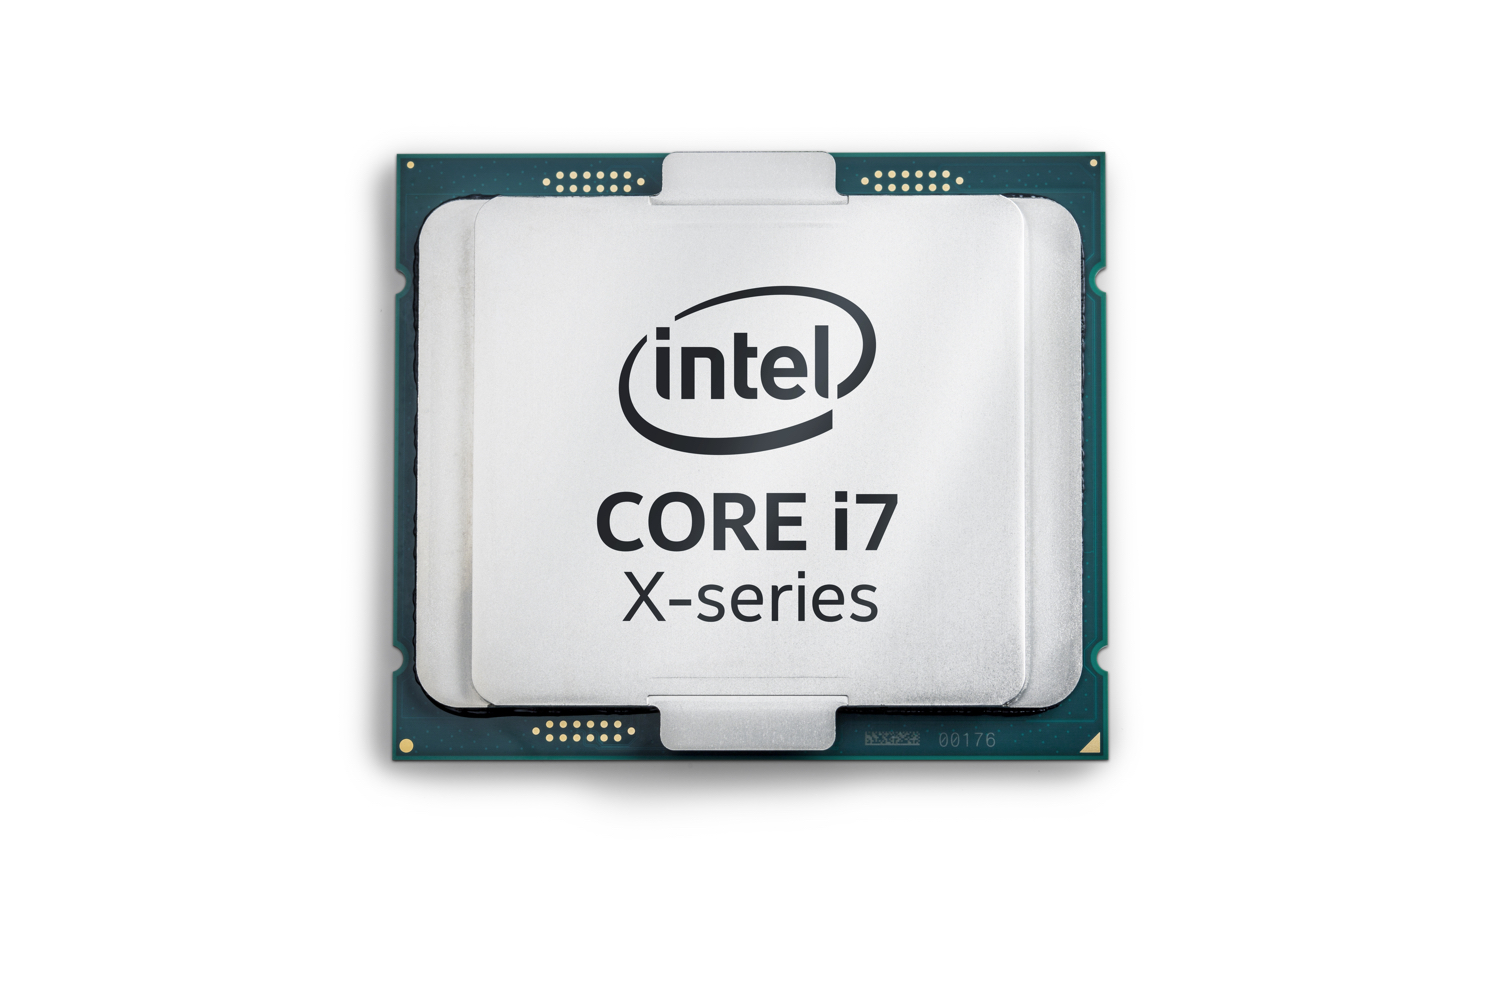 intel x series computex 2017 intelcorei7xserieskabylake